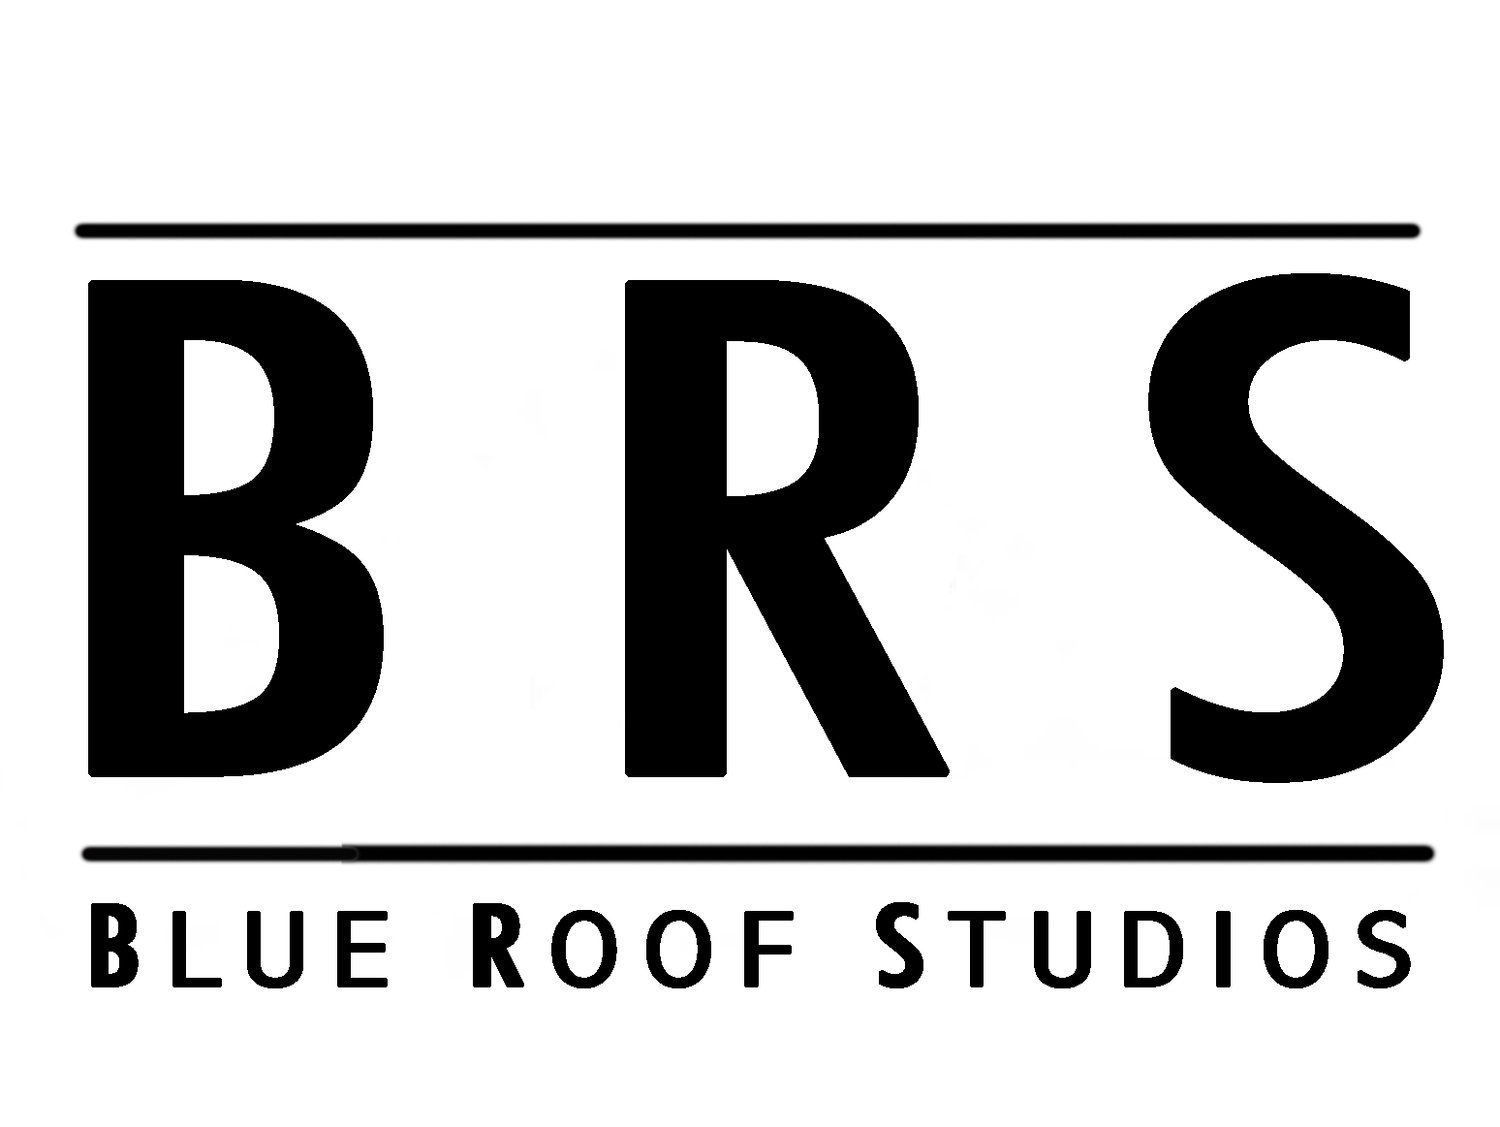  BLUE ROOF STUDIOS